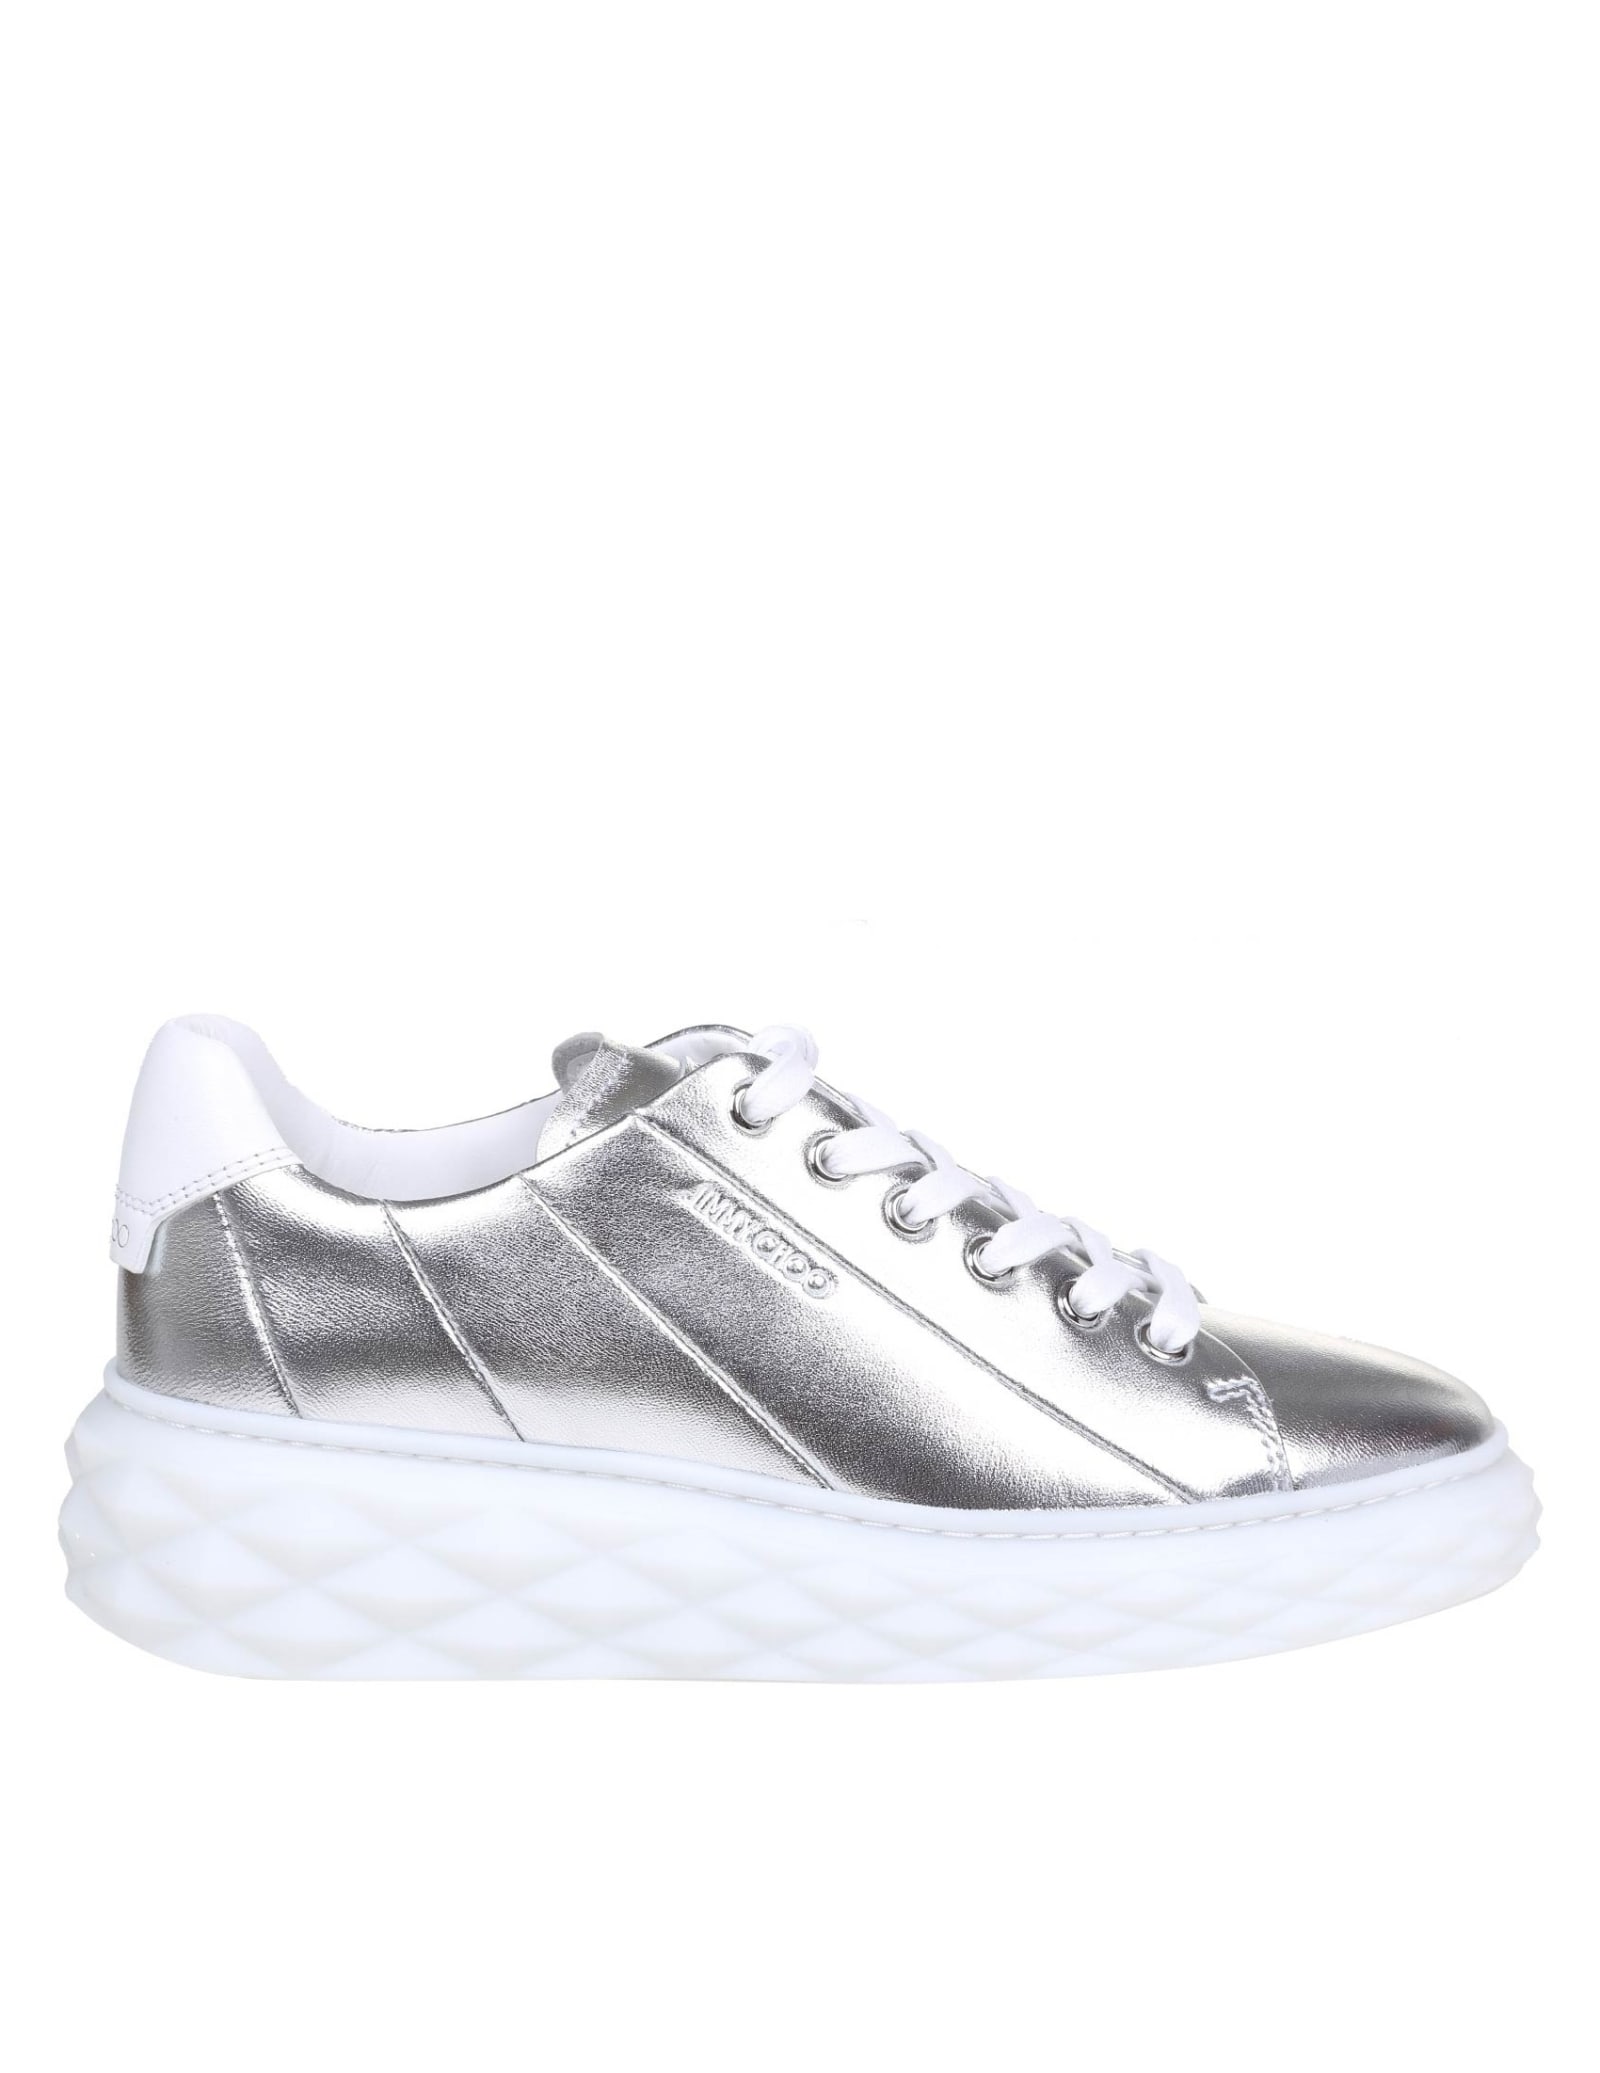 Jimmy Choo Sneakers In Leather In Silver-tone